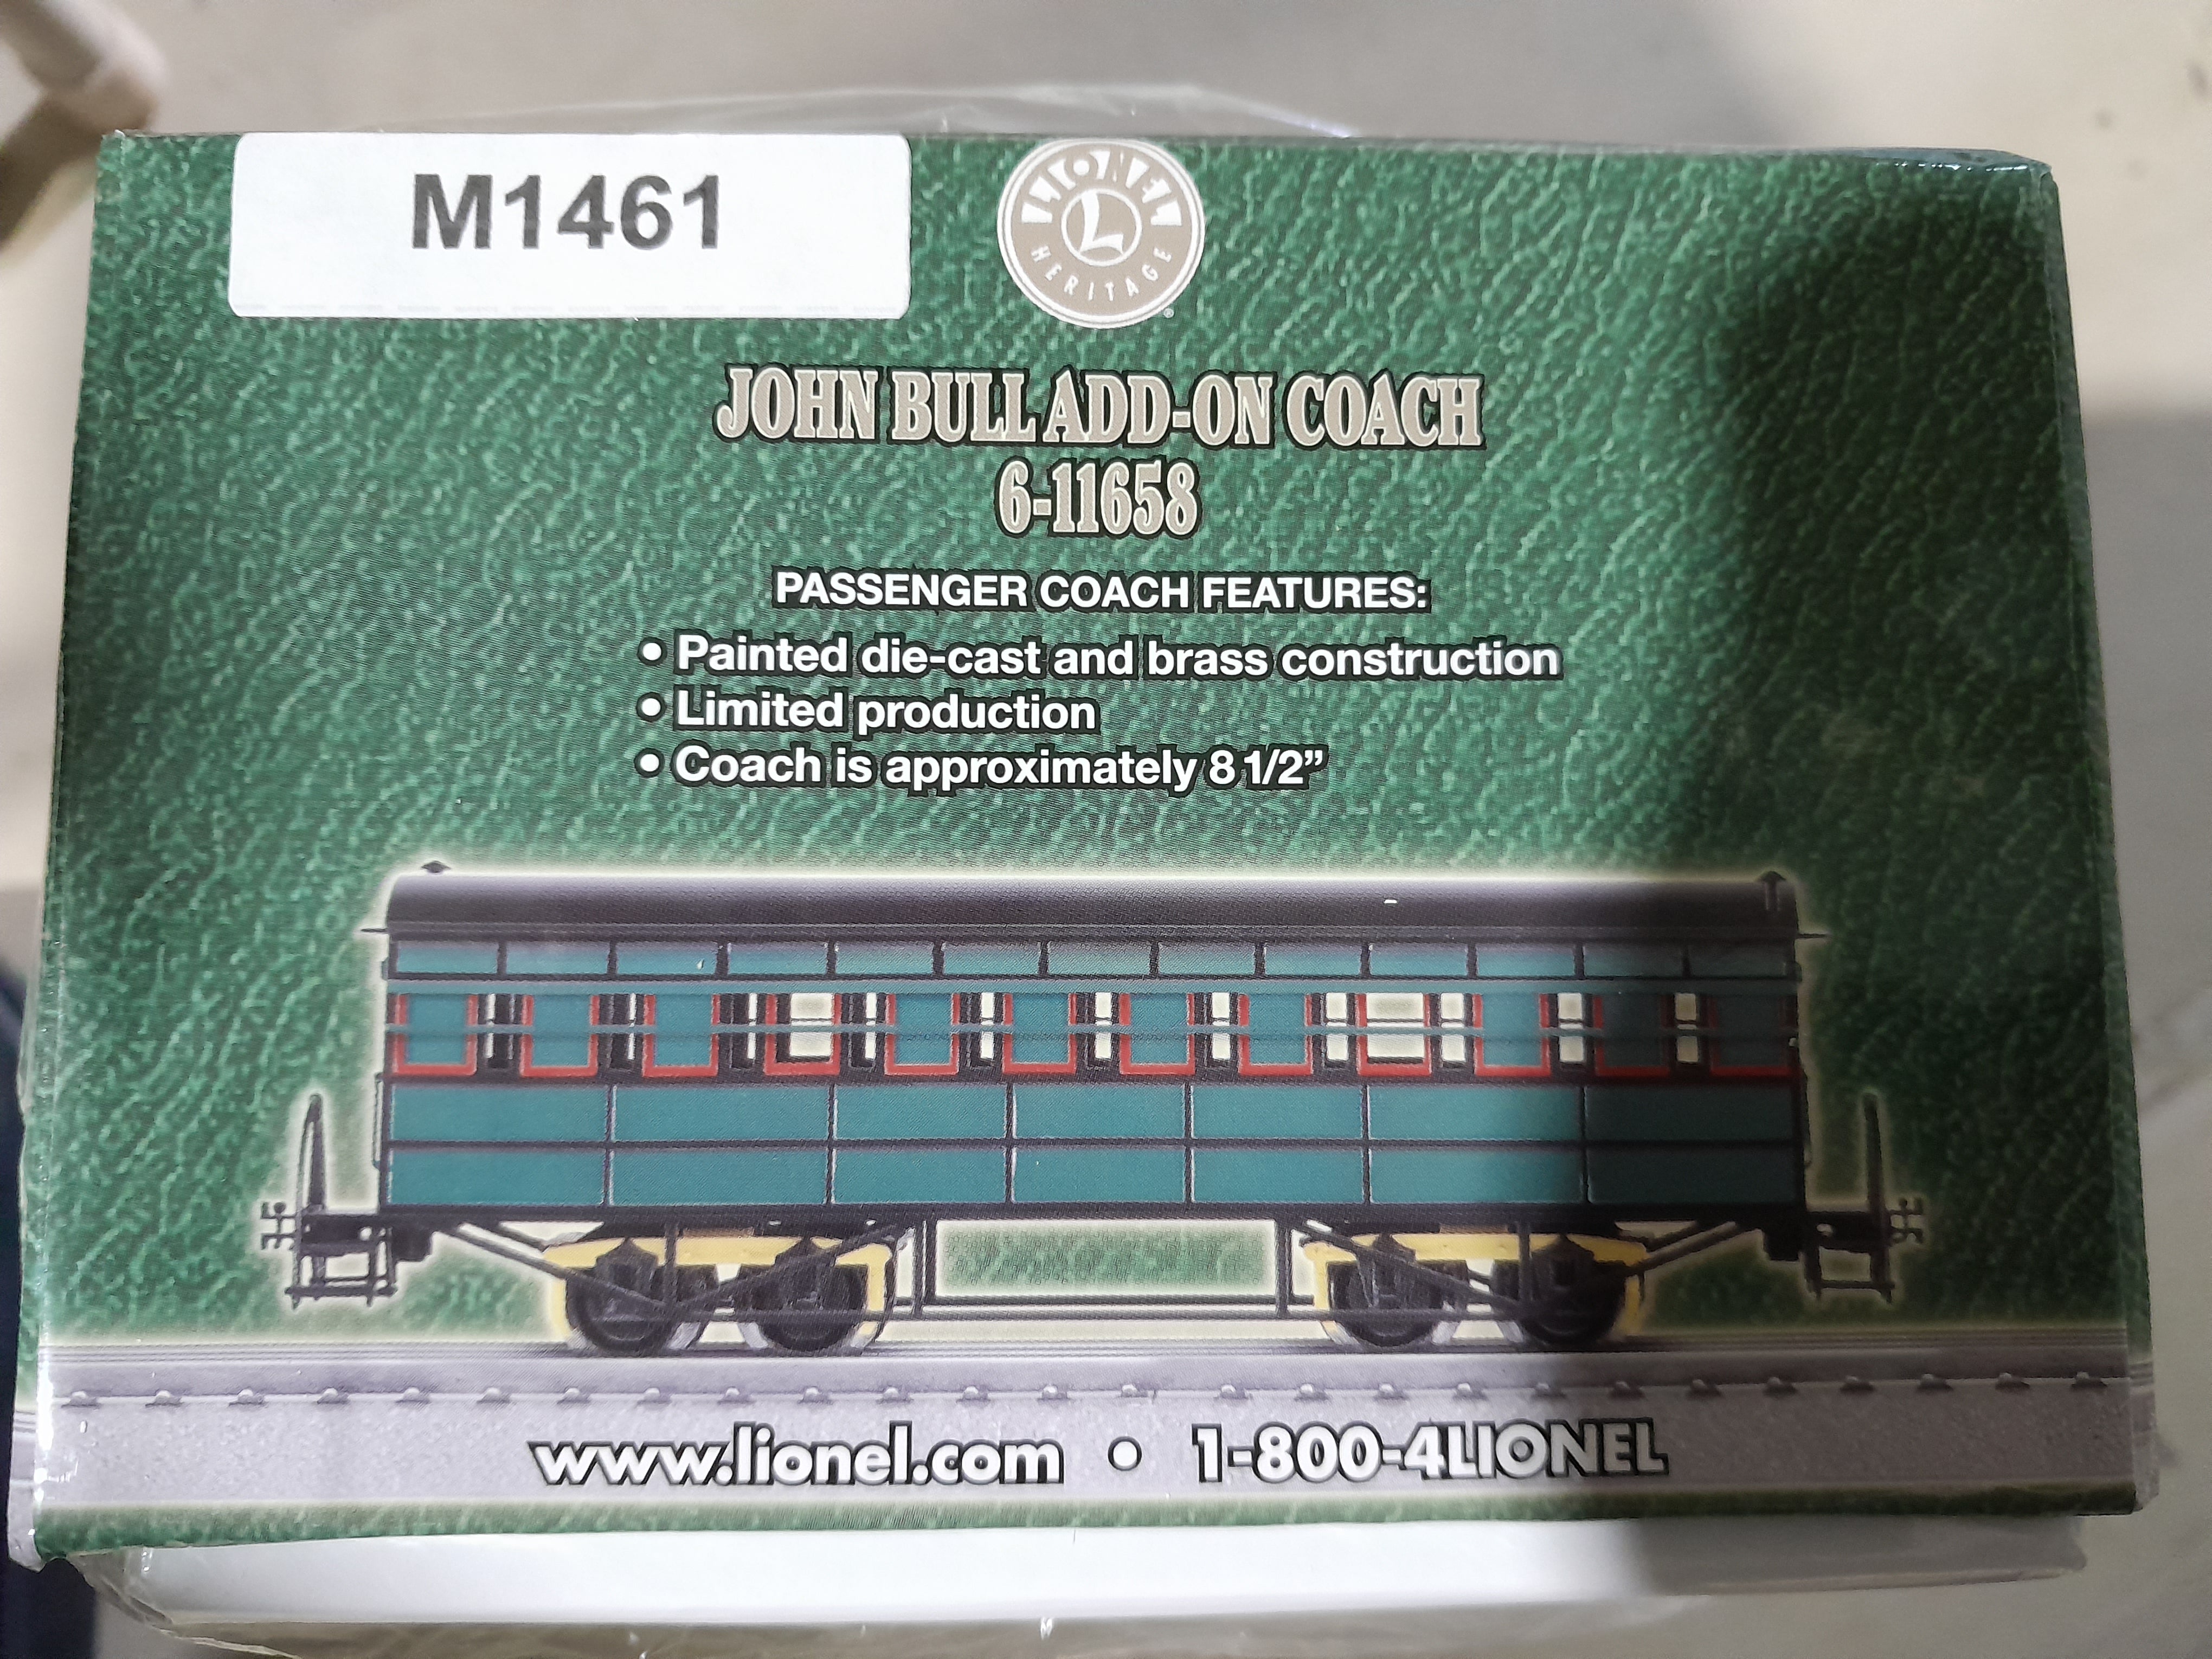 Lionel 6-11658 - John Bull Add-on Coach - Second Hand - M1461